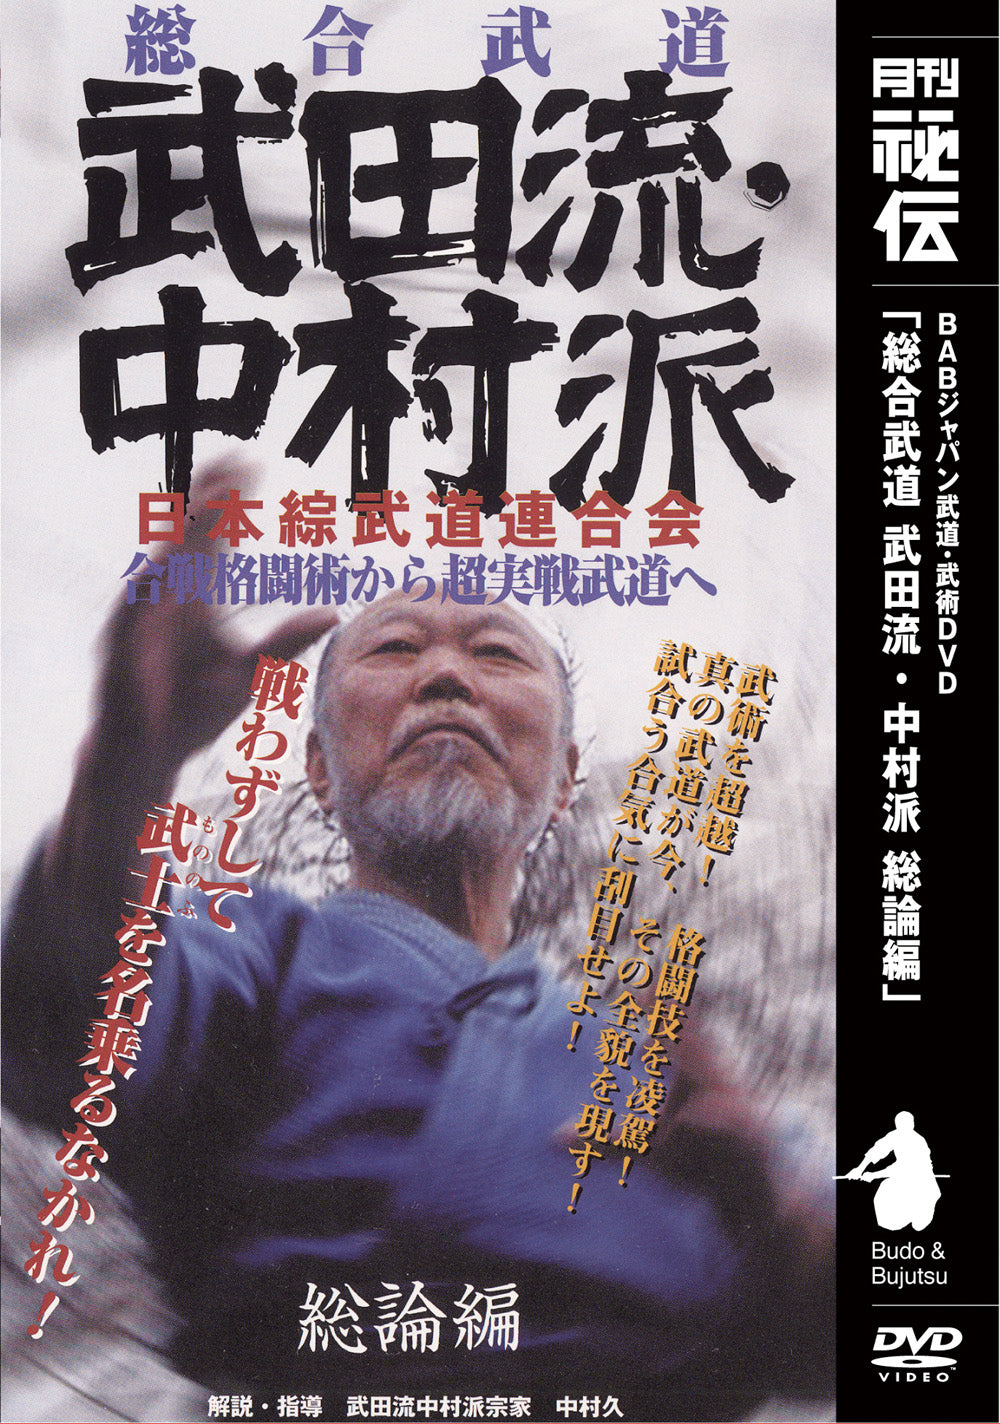 Nakamura Ha Takeda Ryu DVD Vol 1 con Hisashi Nakamura